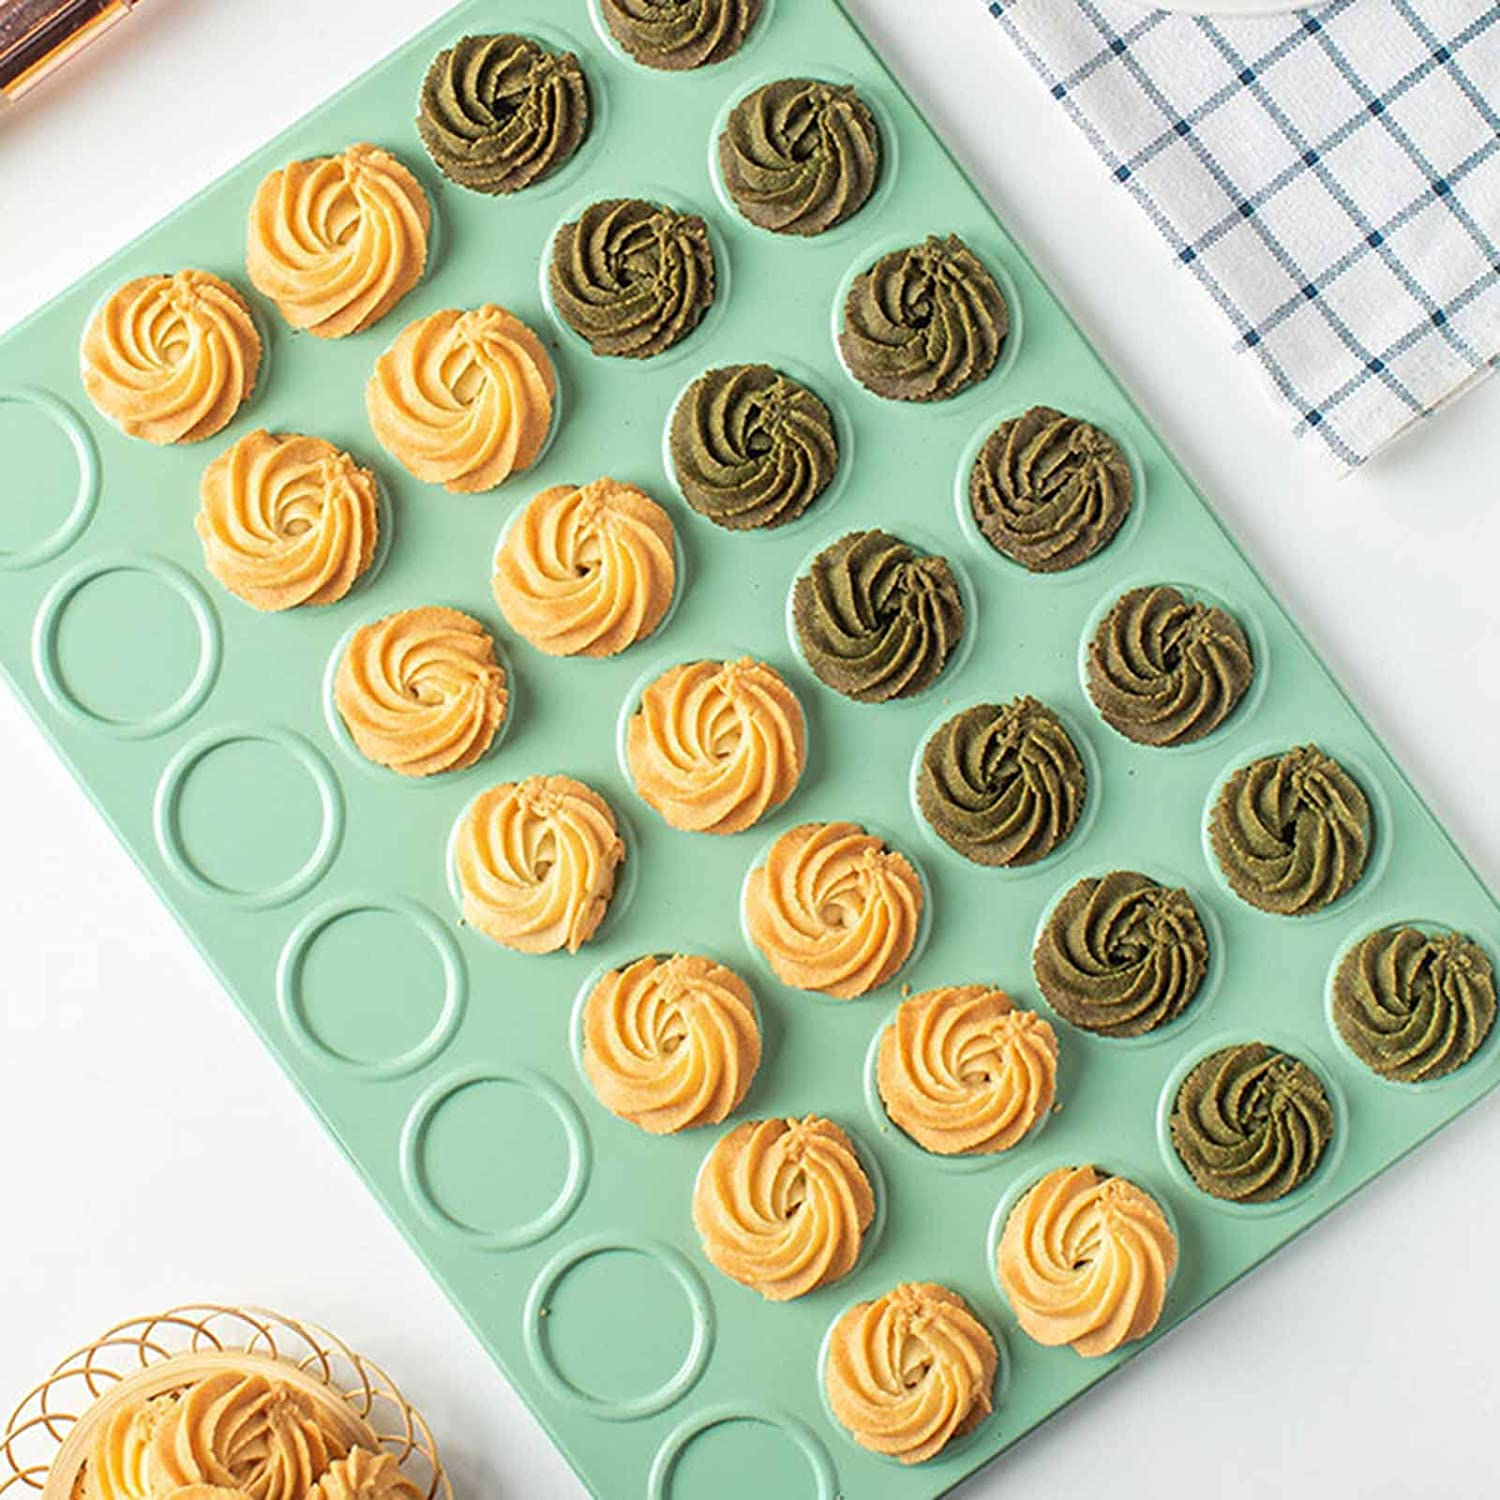 Macaron Cookie Pan - Perfect macarons everytime!